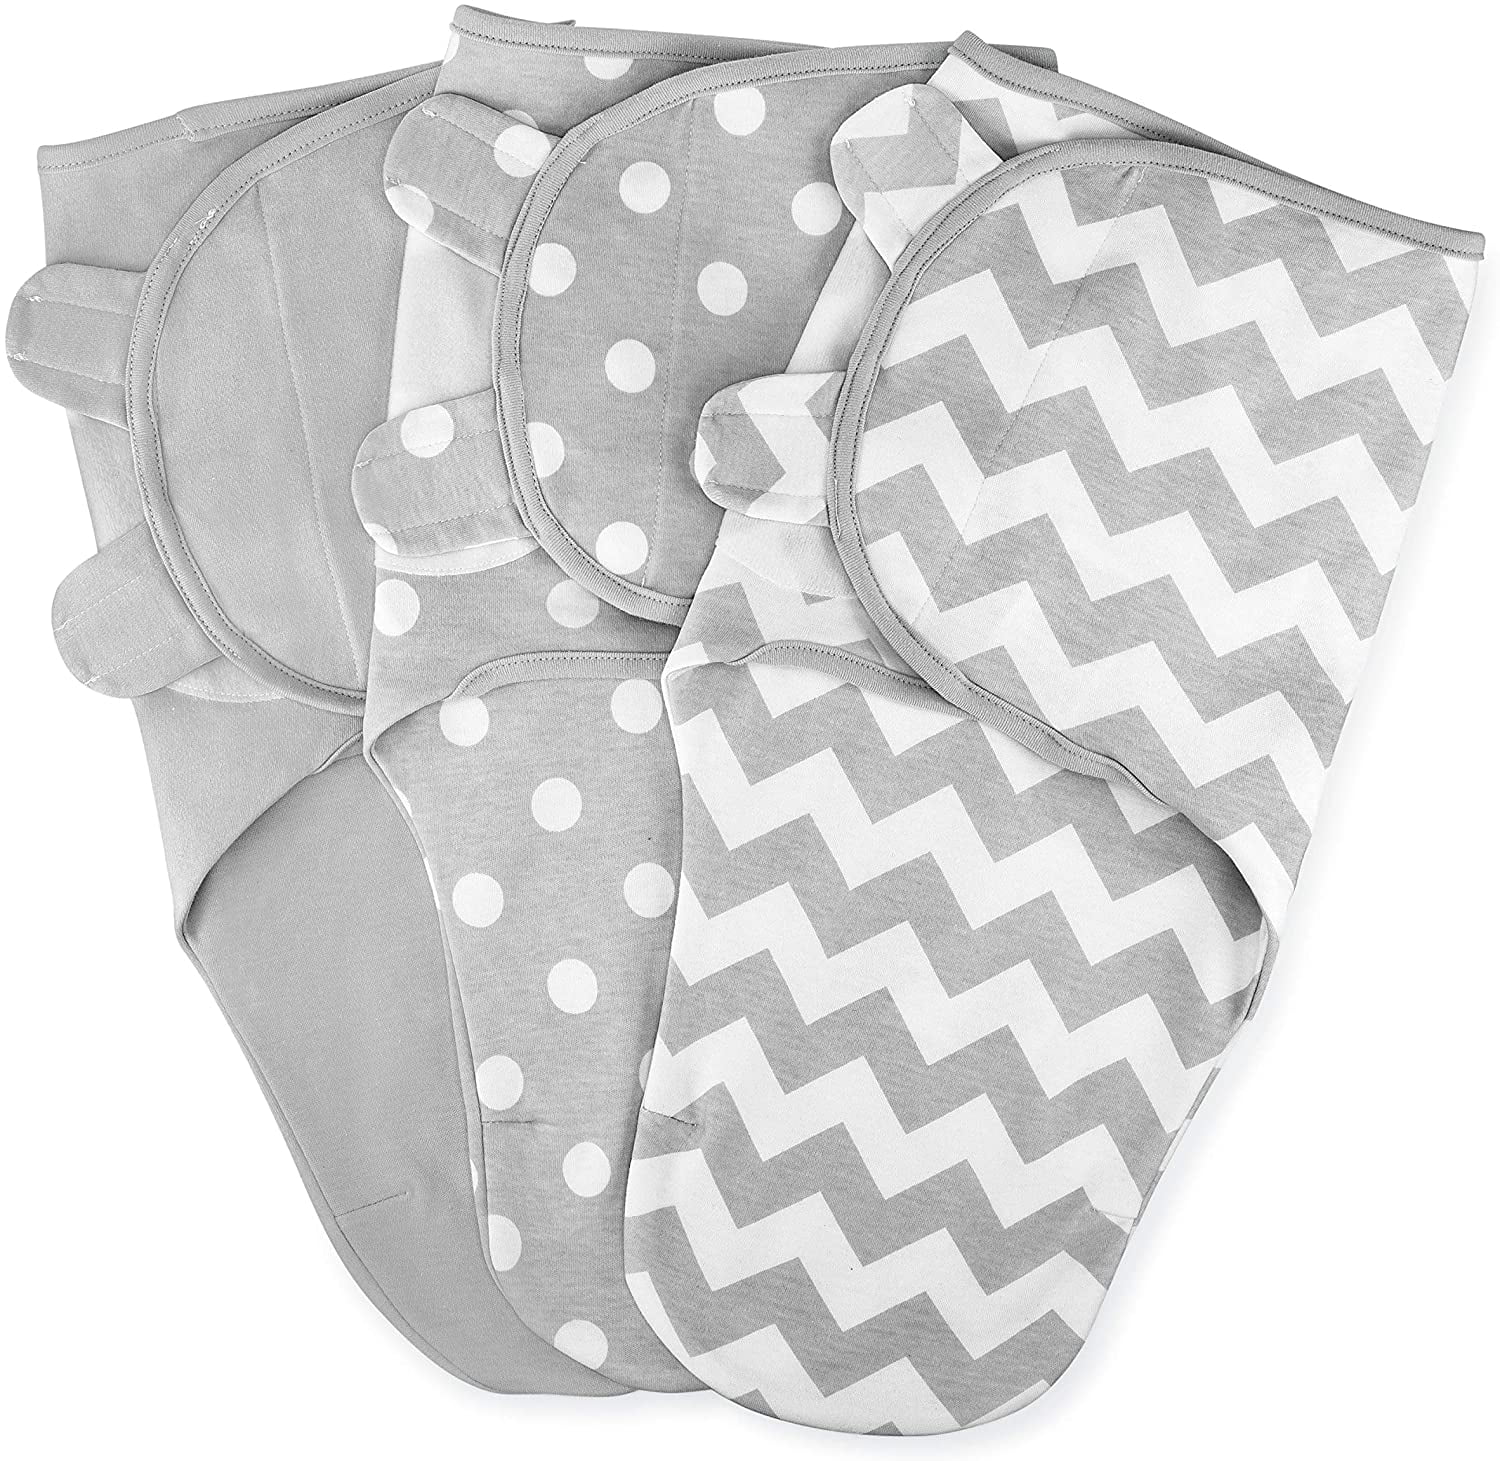 3 Pack Small Size Newborn Swaddles 0-3 Month Infant Adjustable Swaddling Sleep Sack Coral Baby Swaddle Blanket Boy Girl 